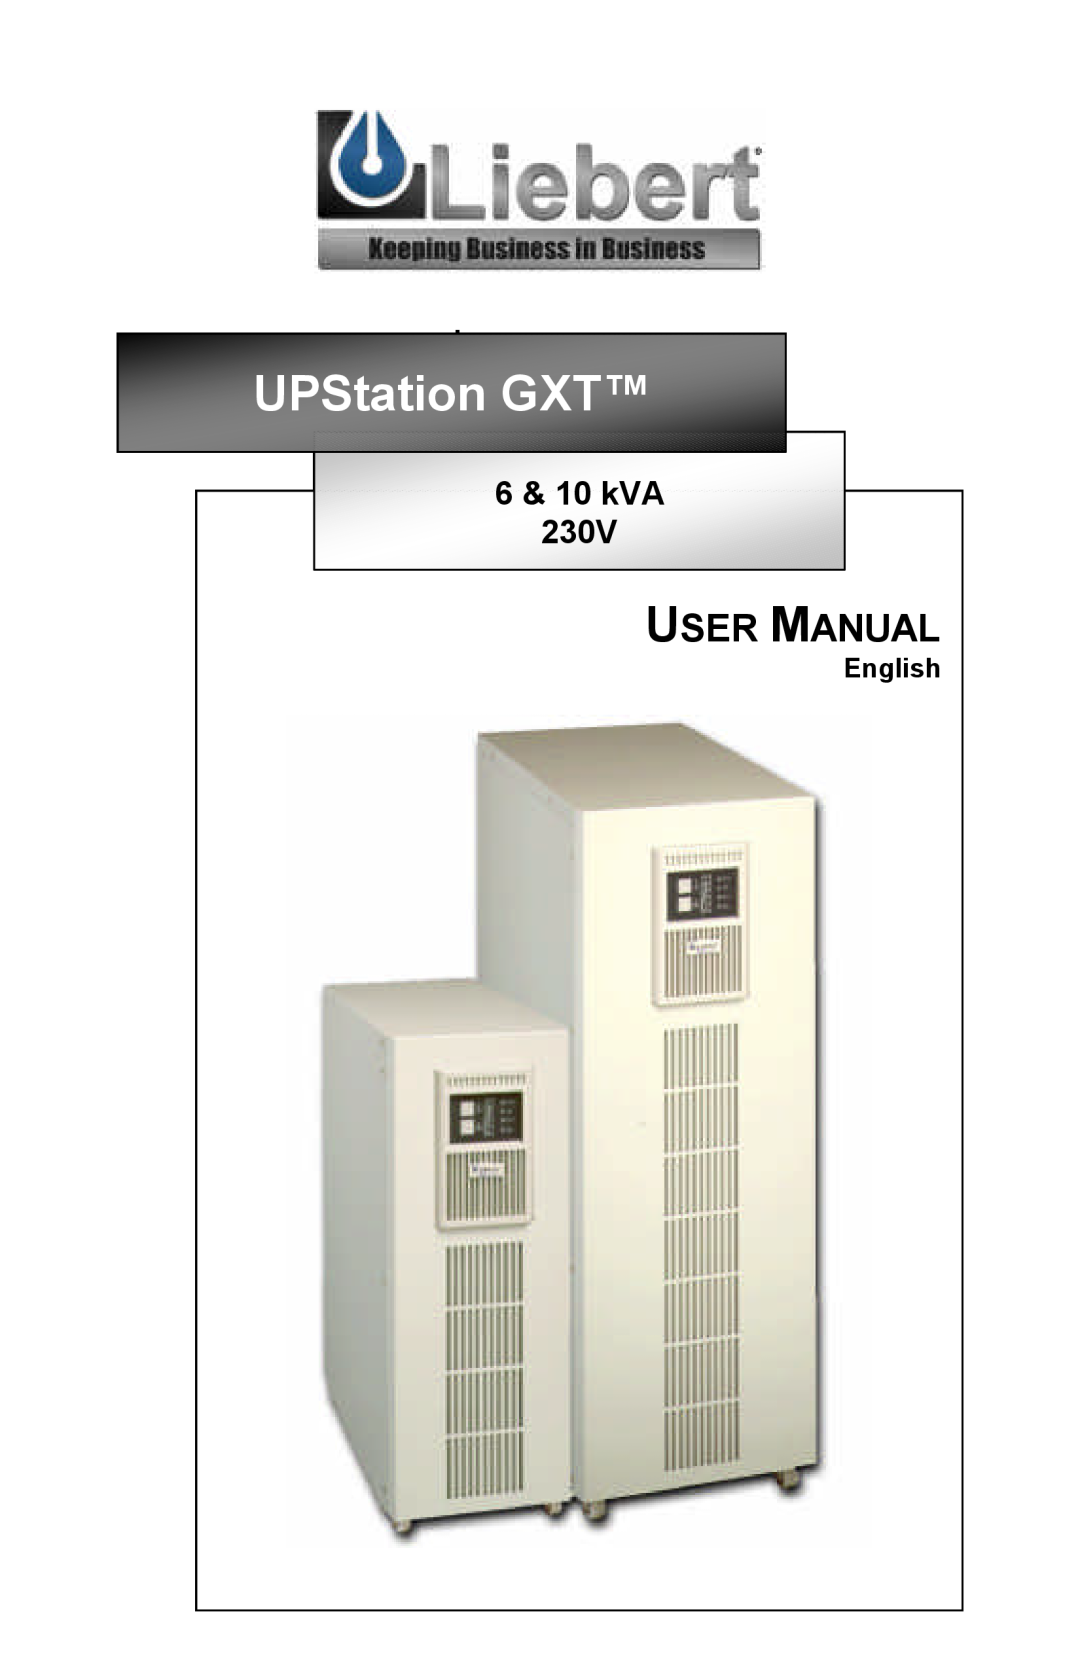 Liebert GXTTM user manual 6 & 10 kVA 230V, English, UPStation GXT, User Manual 